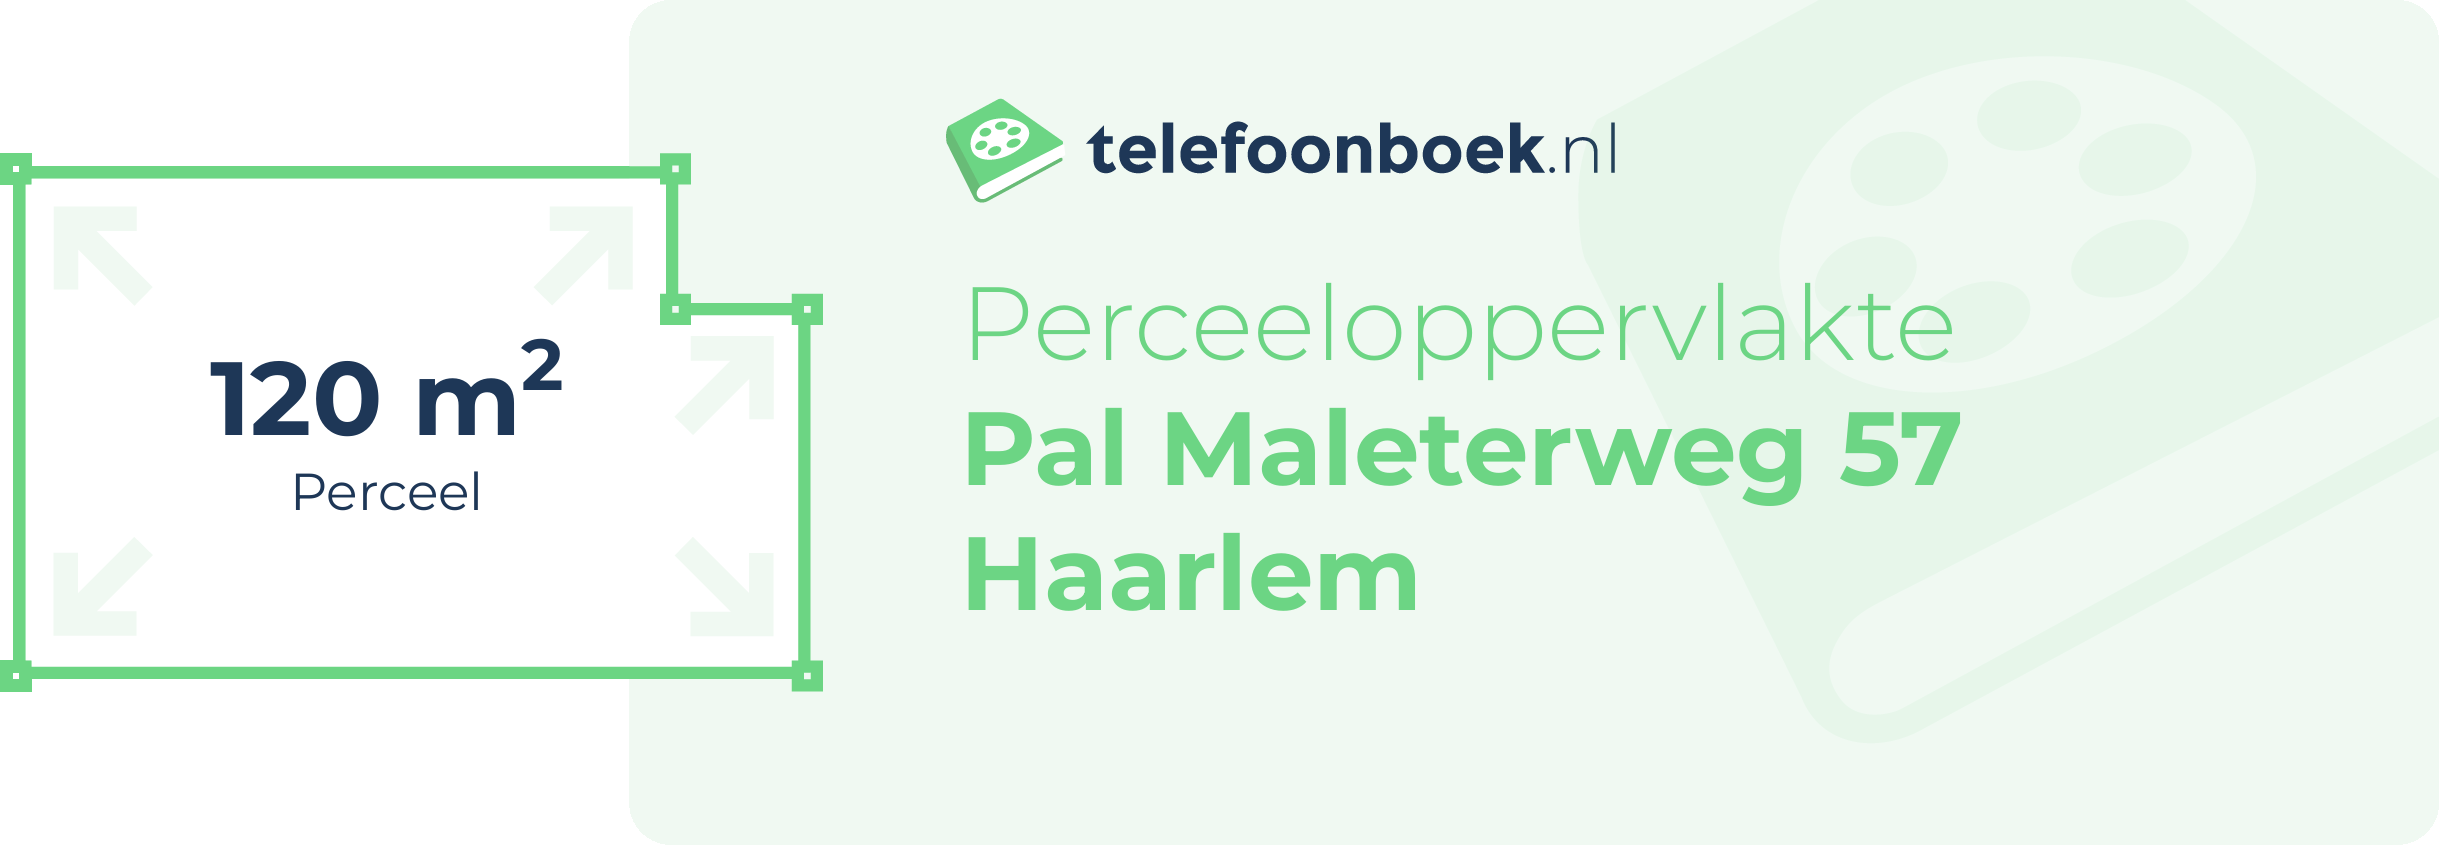 Perceeloppervlakte Pal Maleterweg 57 Haarlem